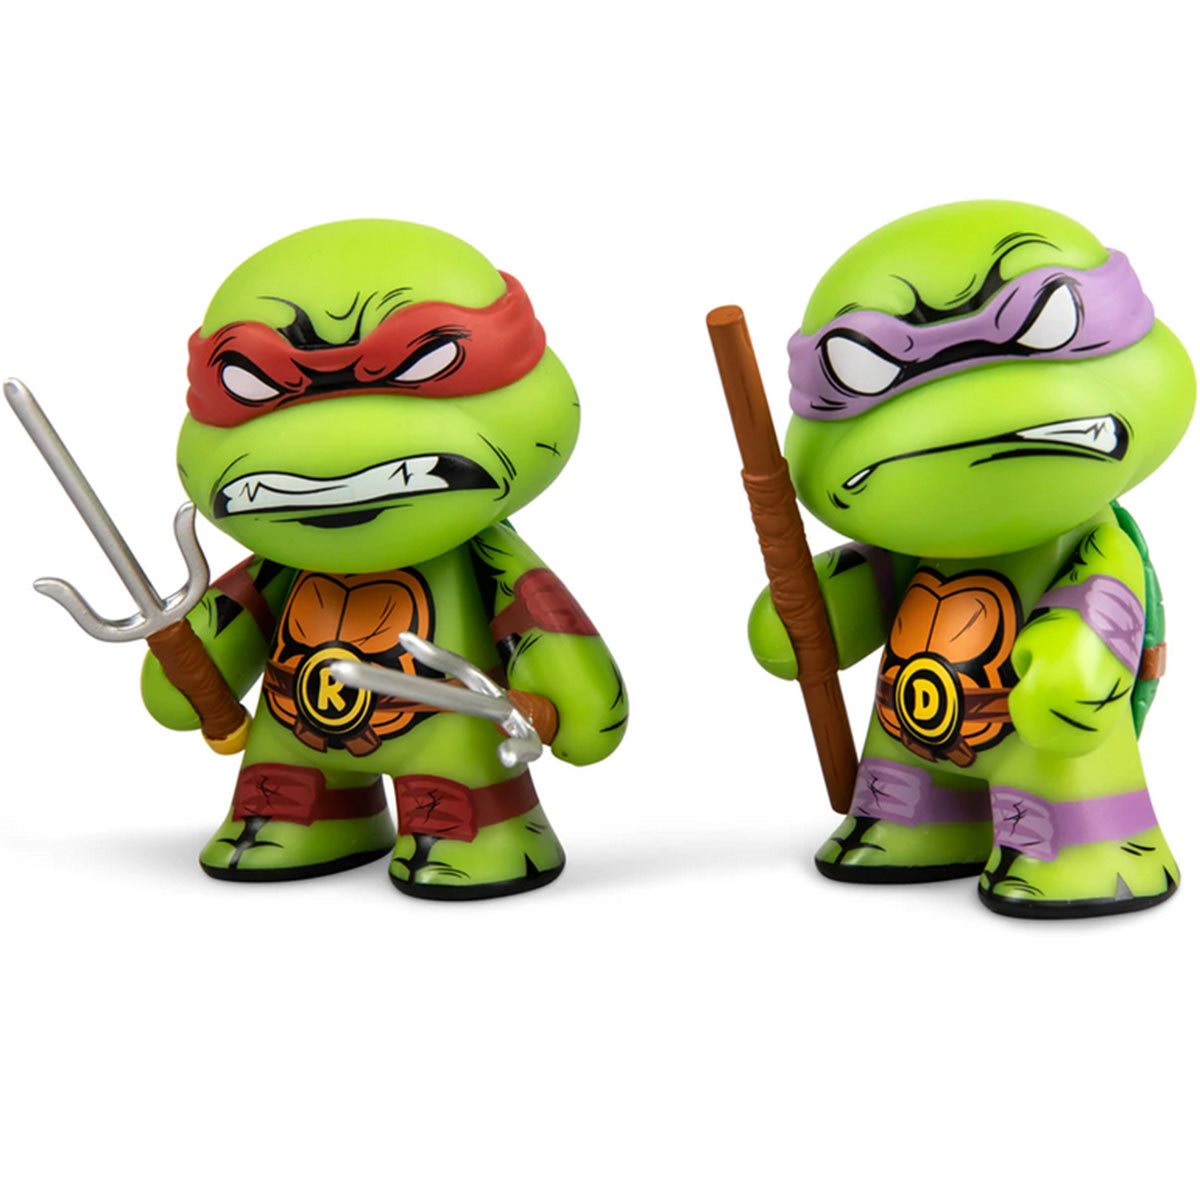 Michelangelo Additional Keychains Ship Free! Kidrobot TMNT Ninja Turtles 